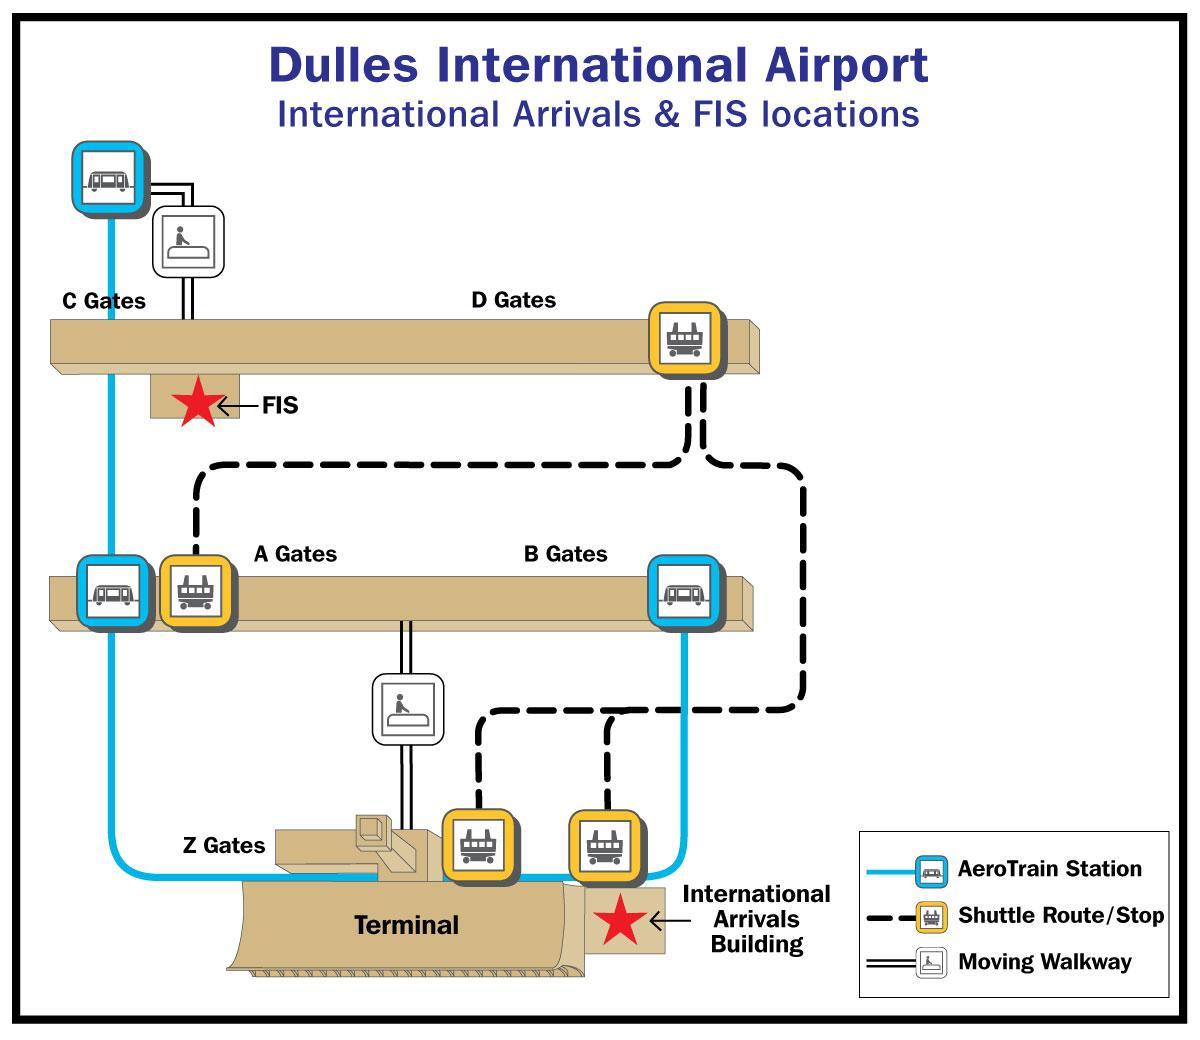 فرودگاه دالس دروازه نقشه